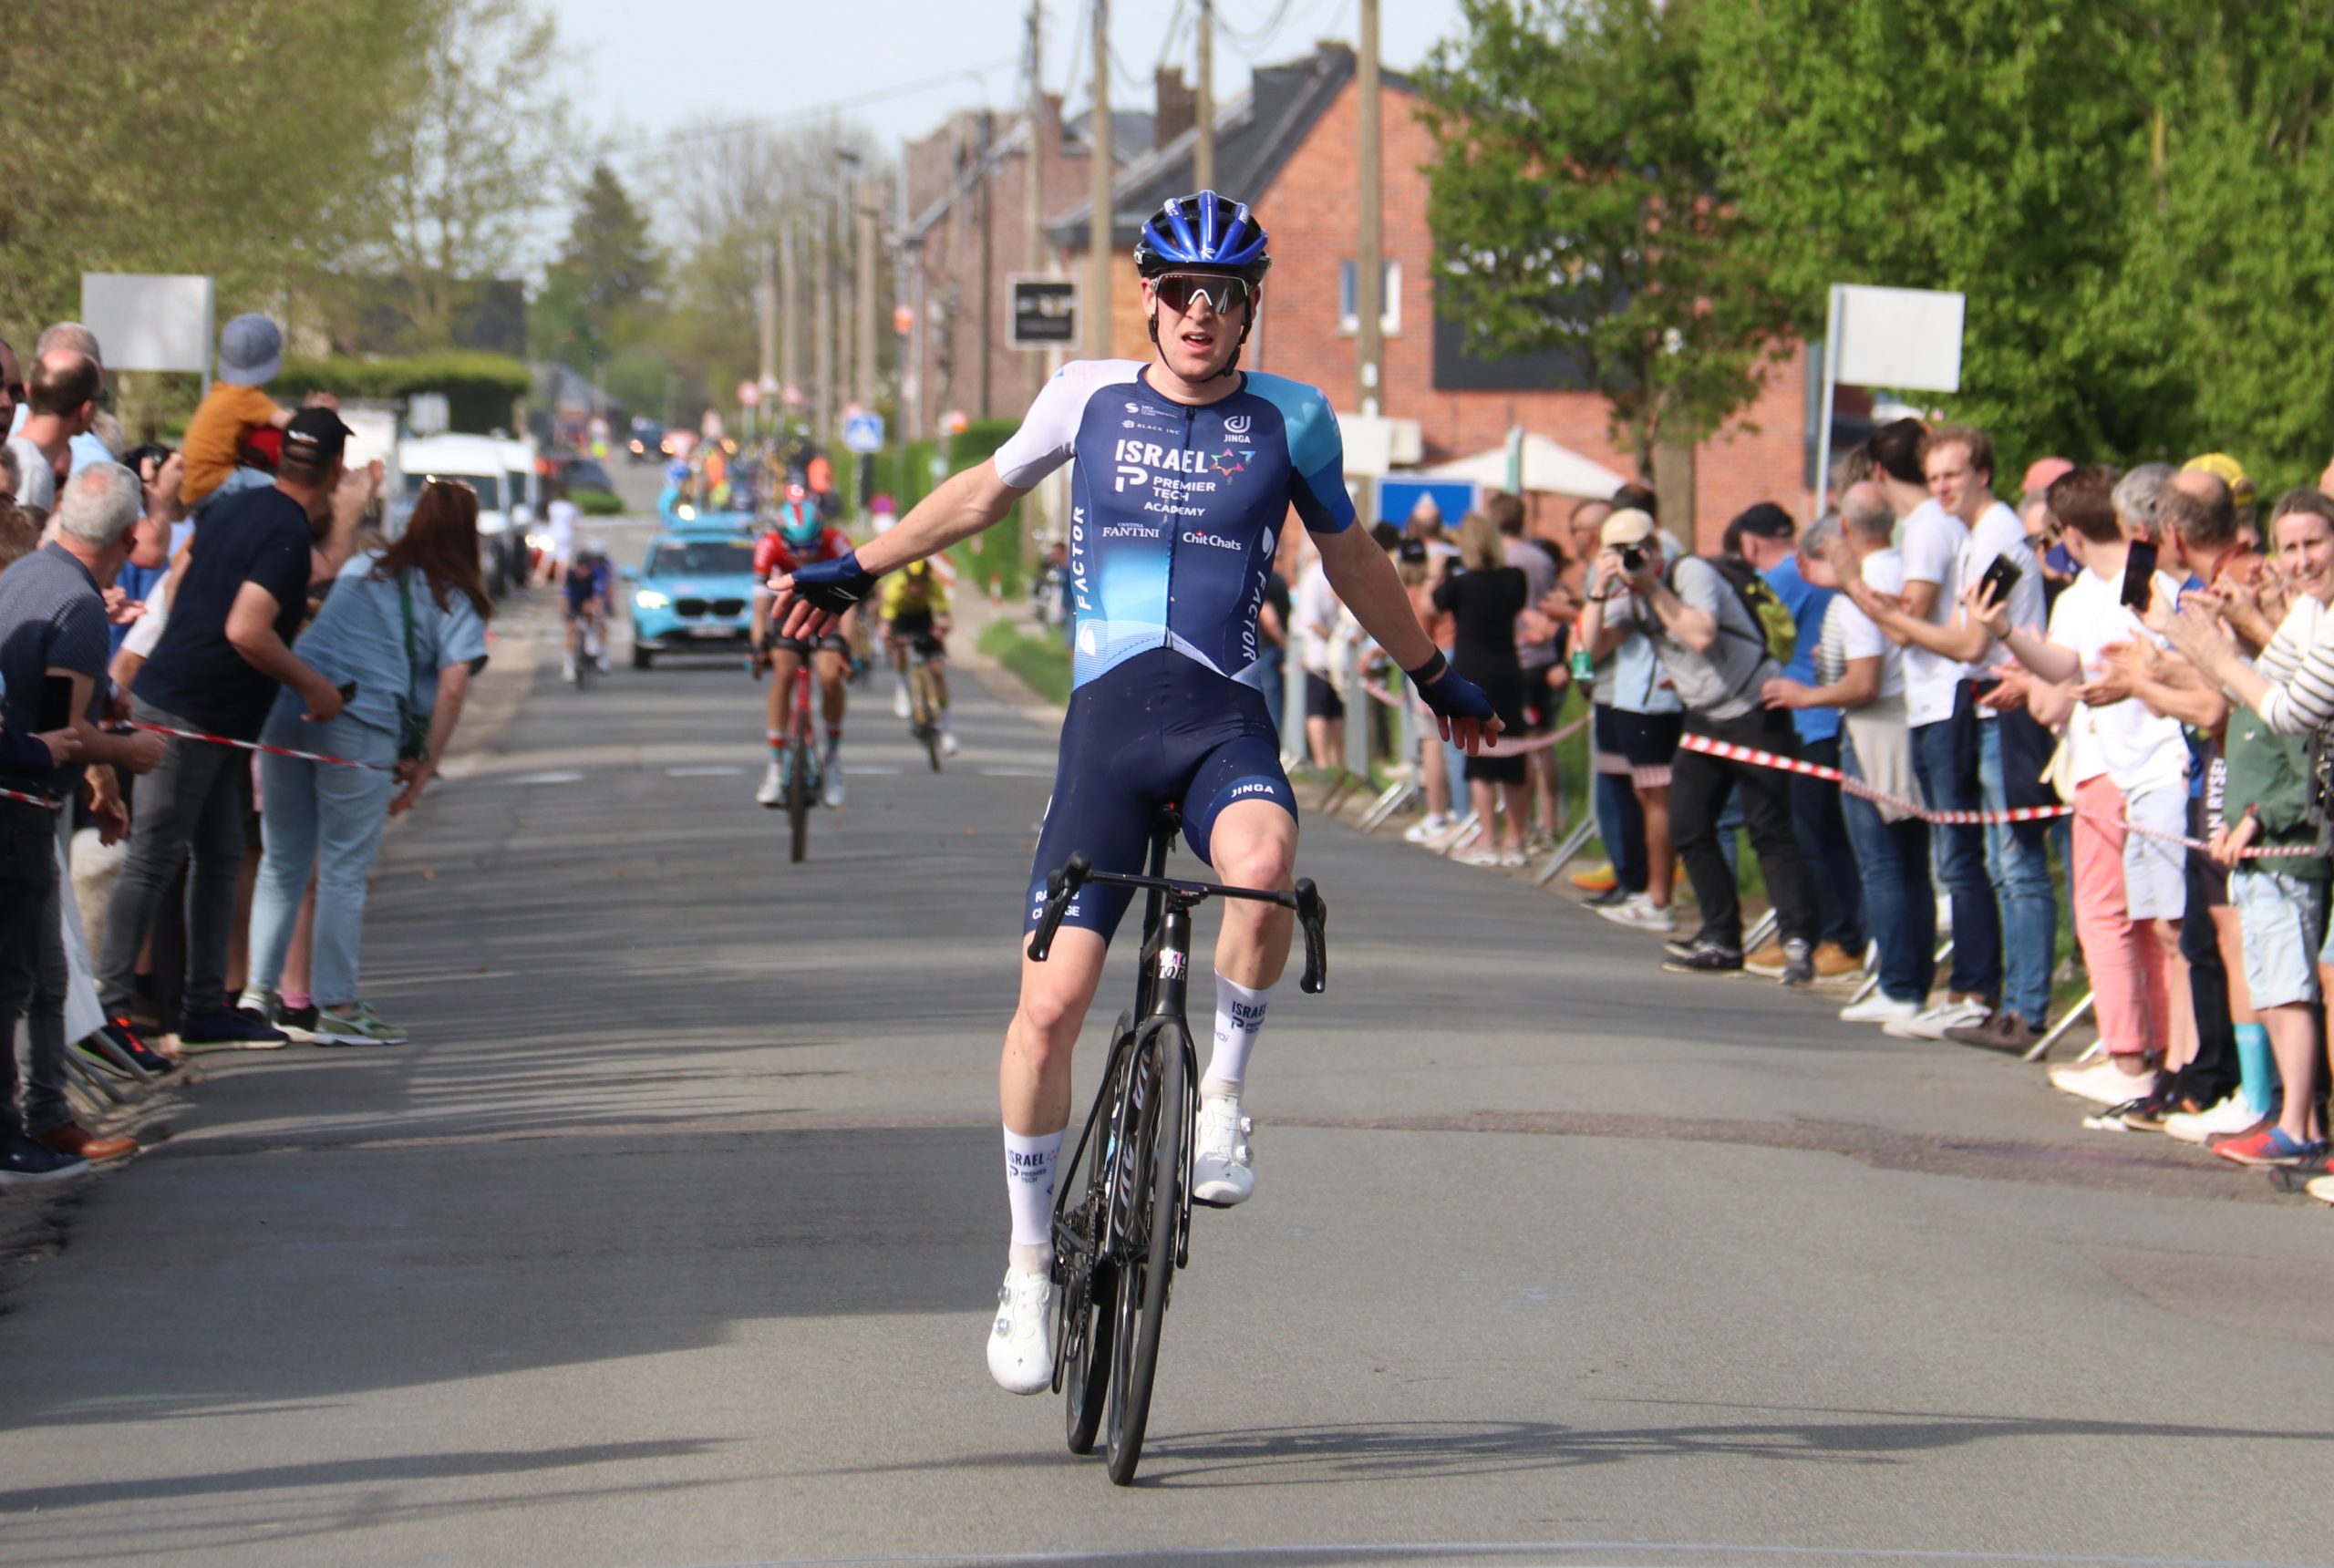 Joe Blackmore conquista a Liège-Bastogne-Liège Espoirs! Daniel Lima foi 16º!